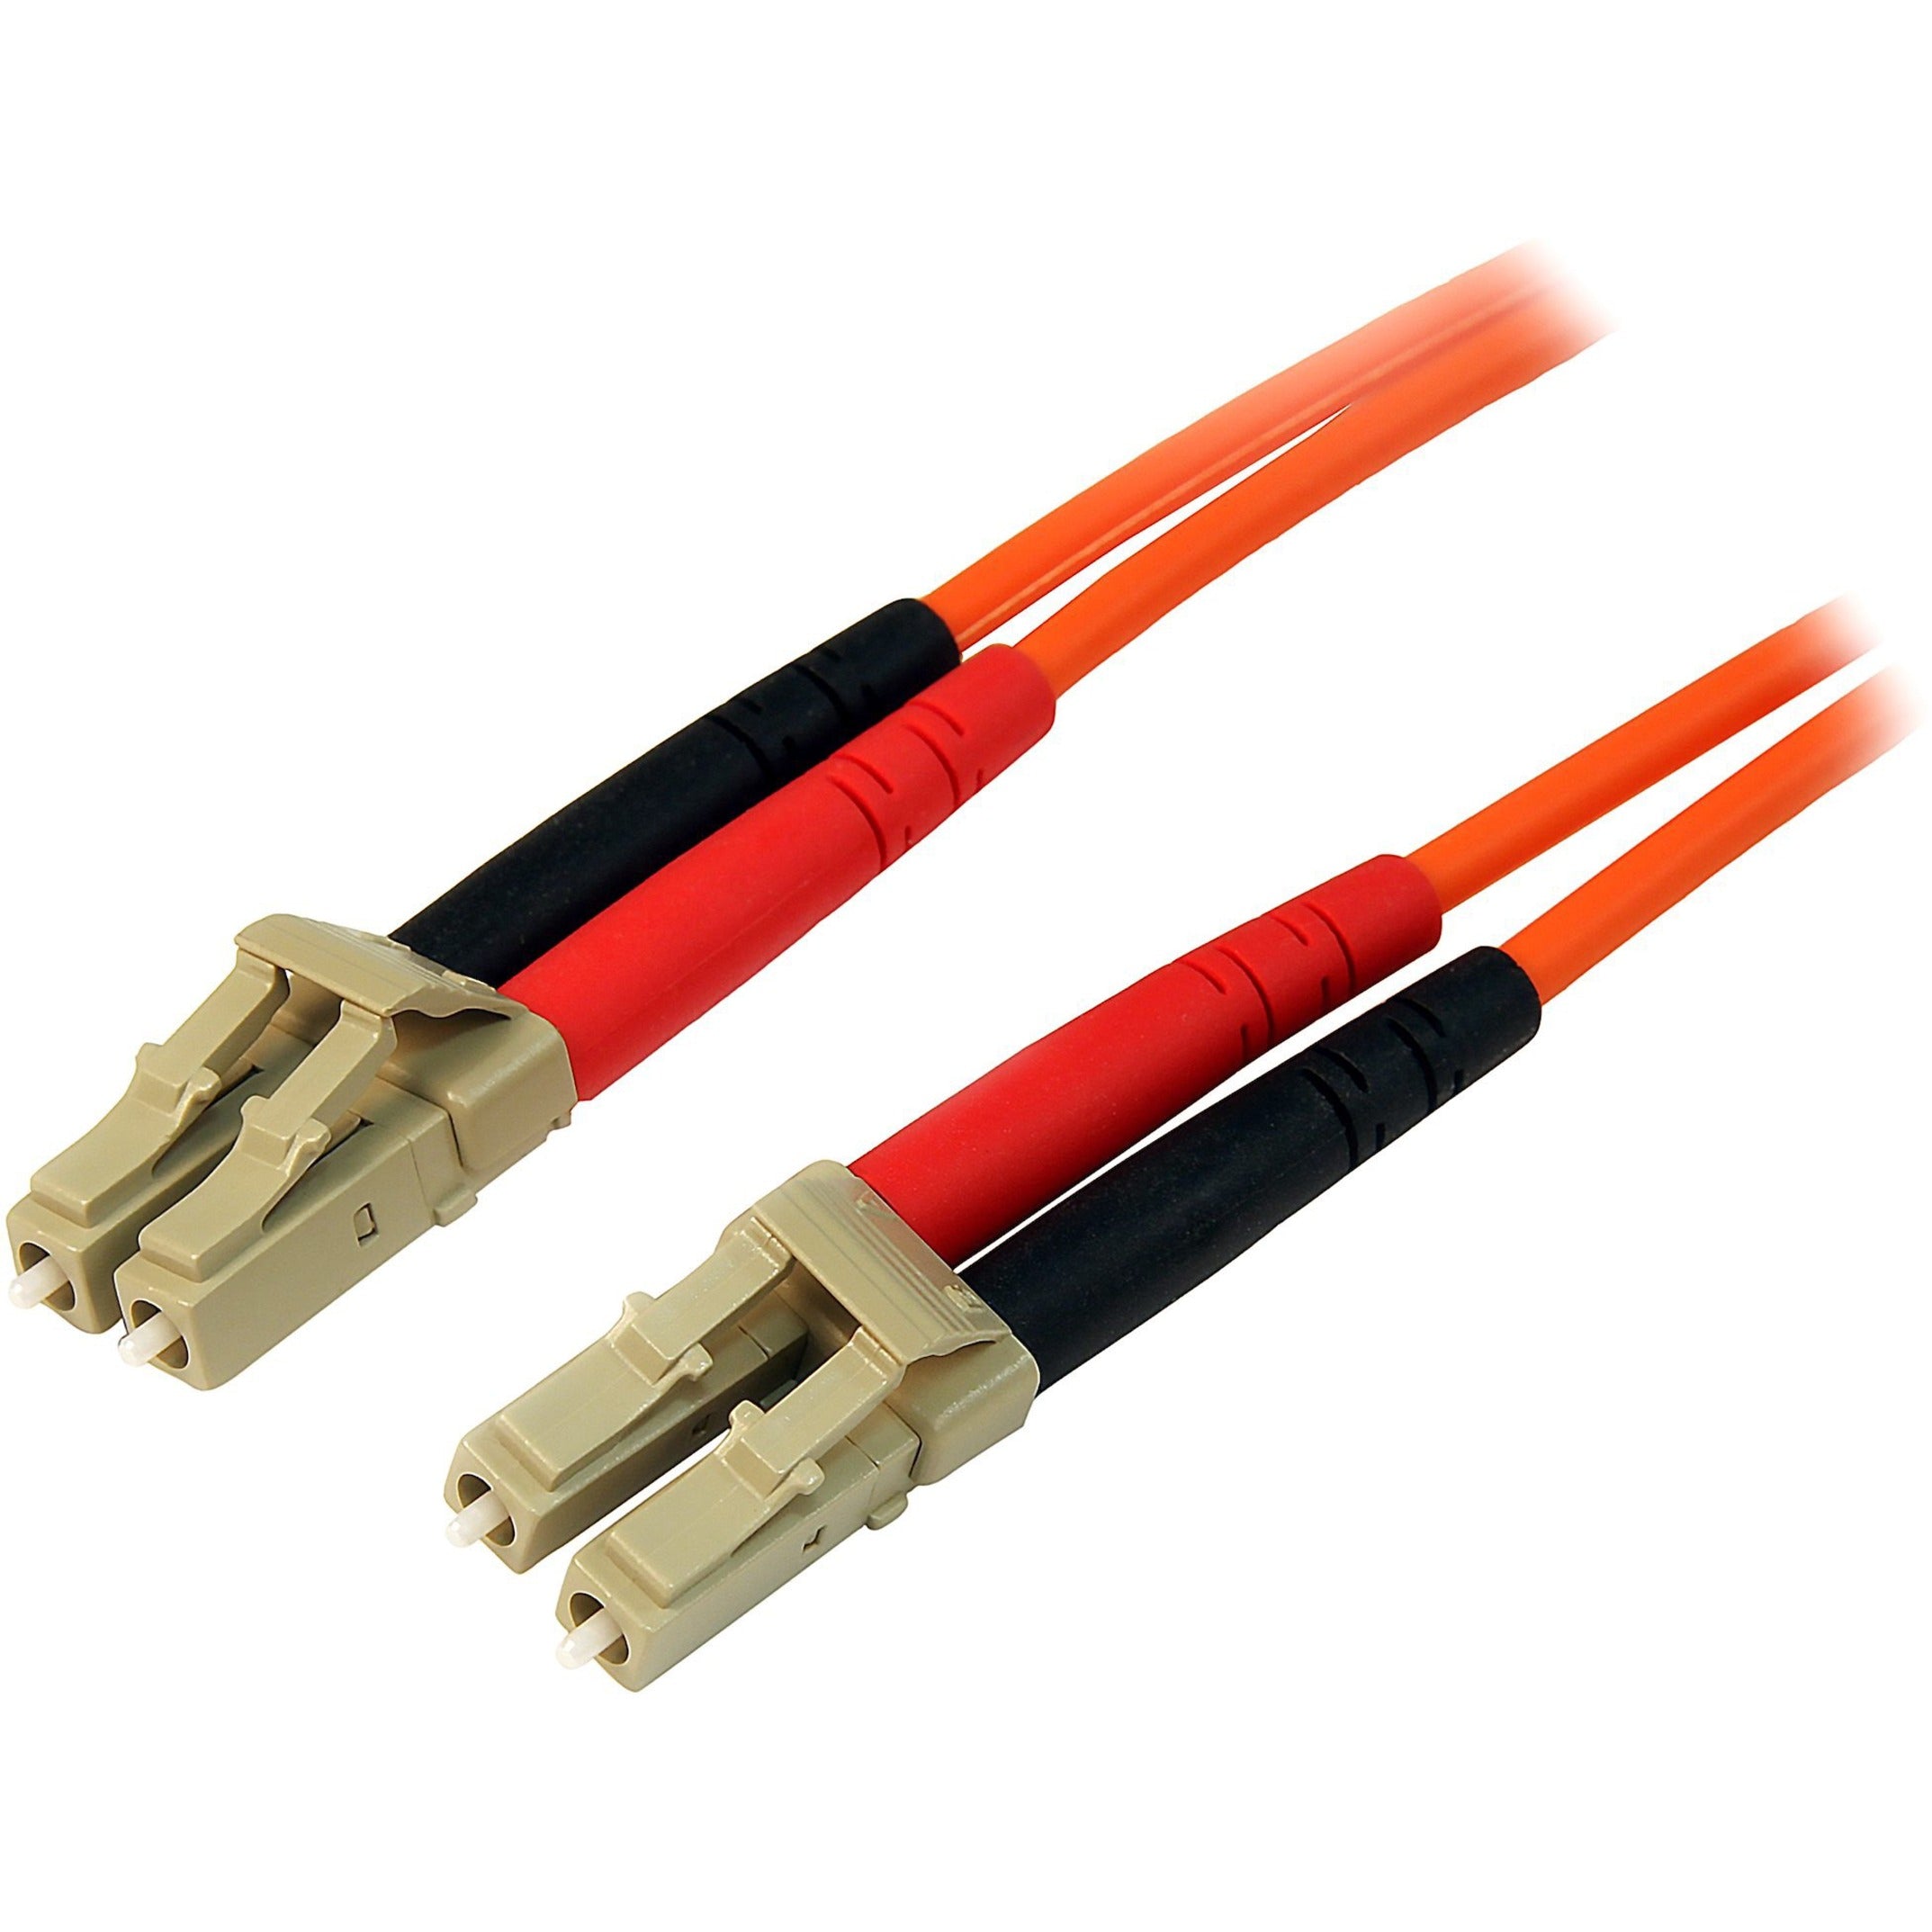 StarTech.com  Multimode  Duplex  Fiber Patch Cable  LC  LC  10 Gbit/s  Data Transfer Rate  Orange